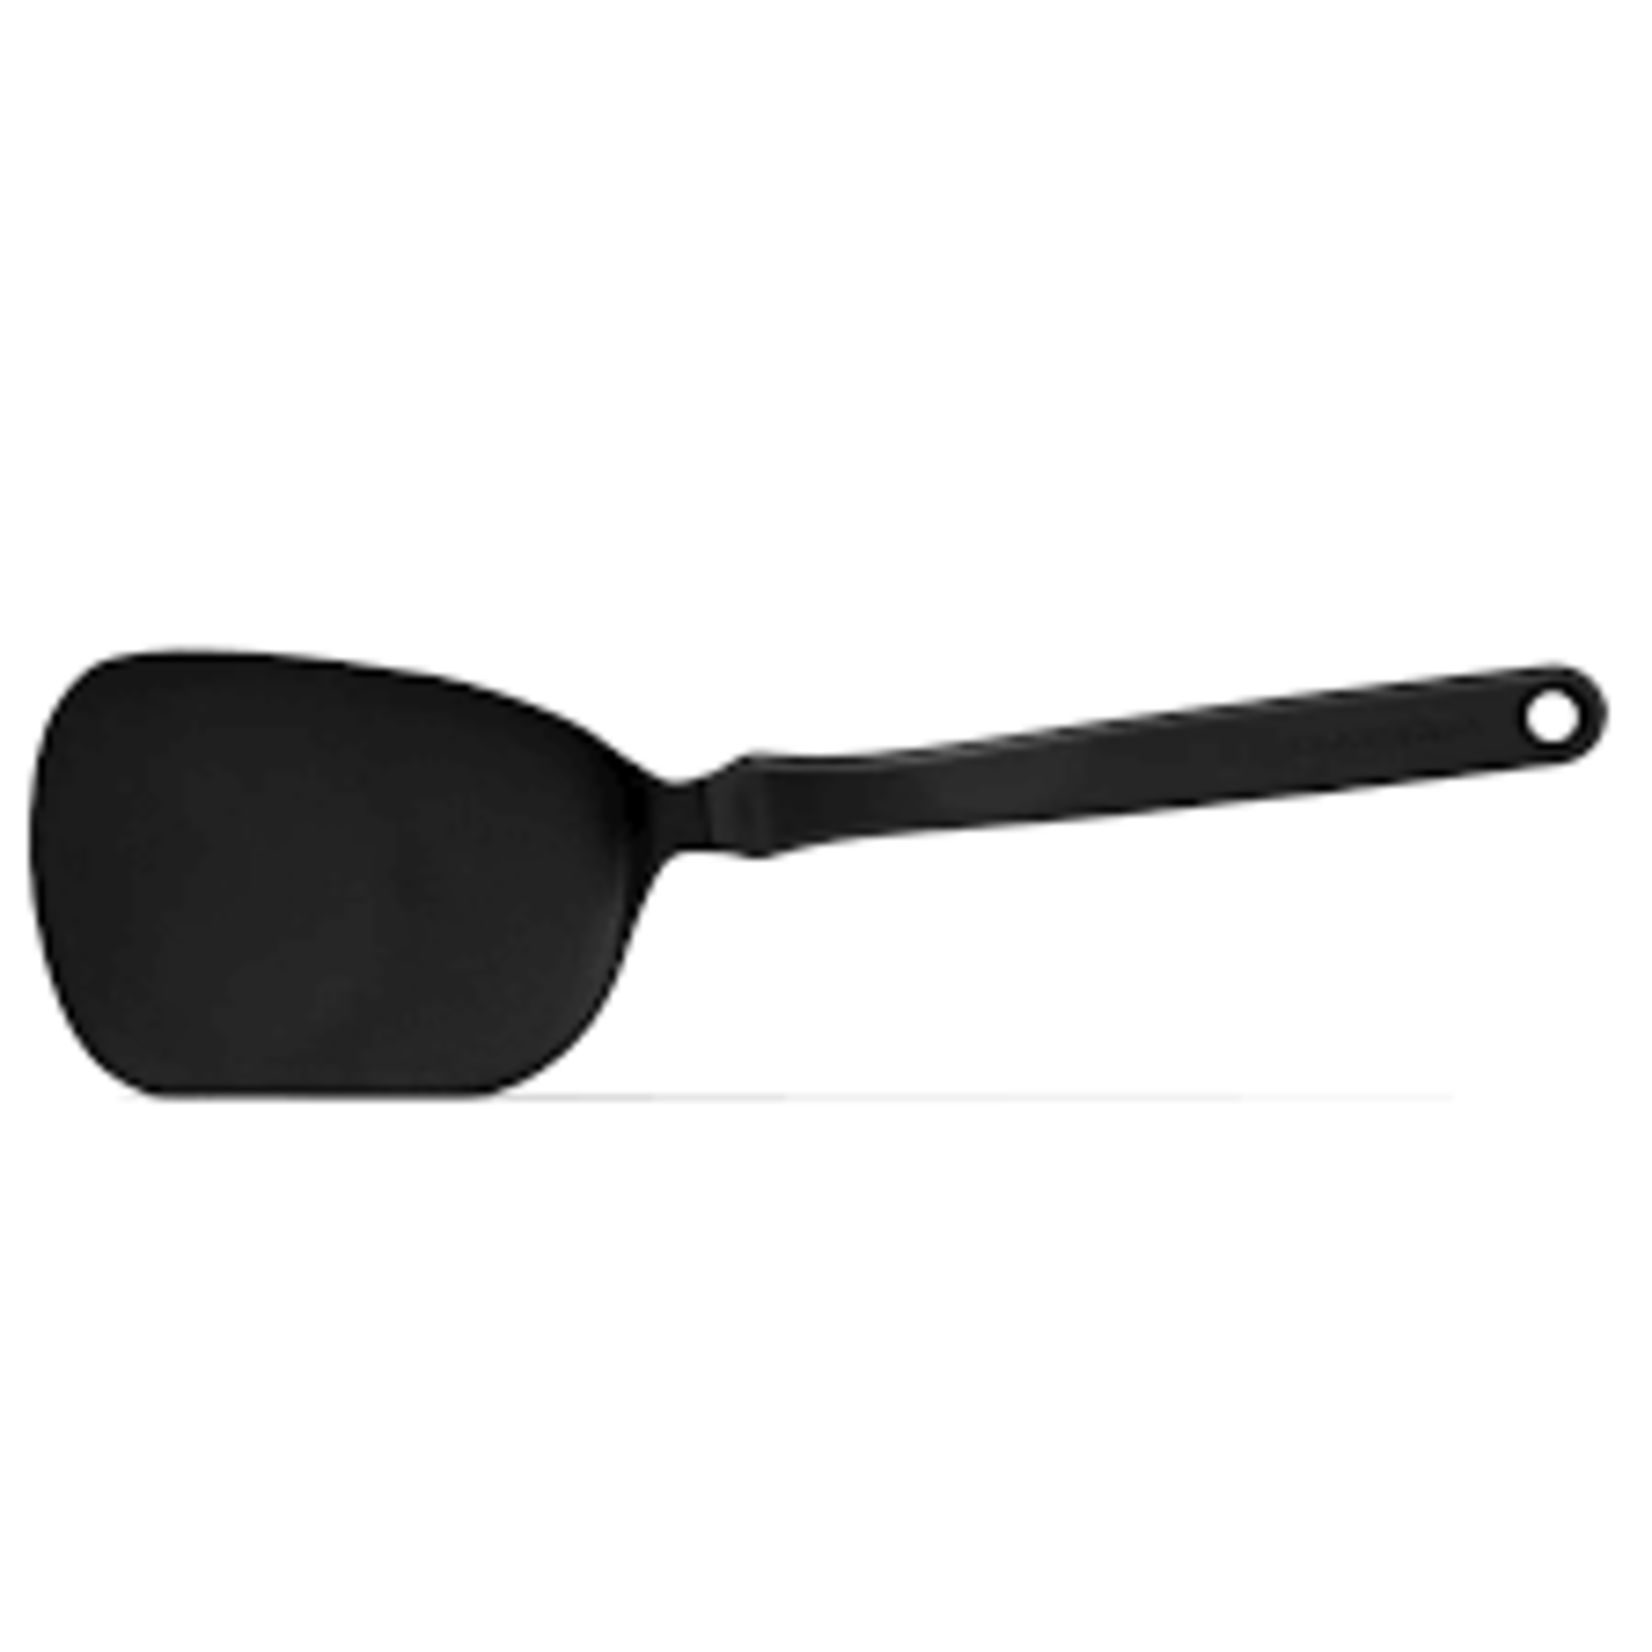 Dreamfarm DFCU3710 Dream chopula black spatula